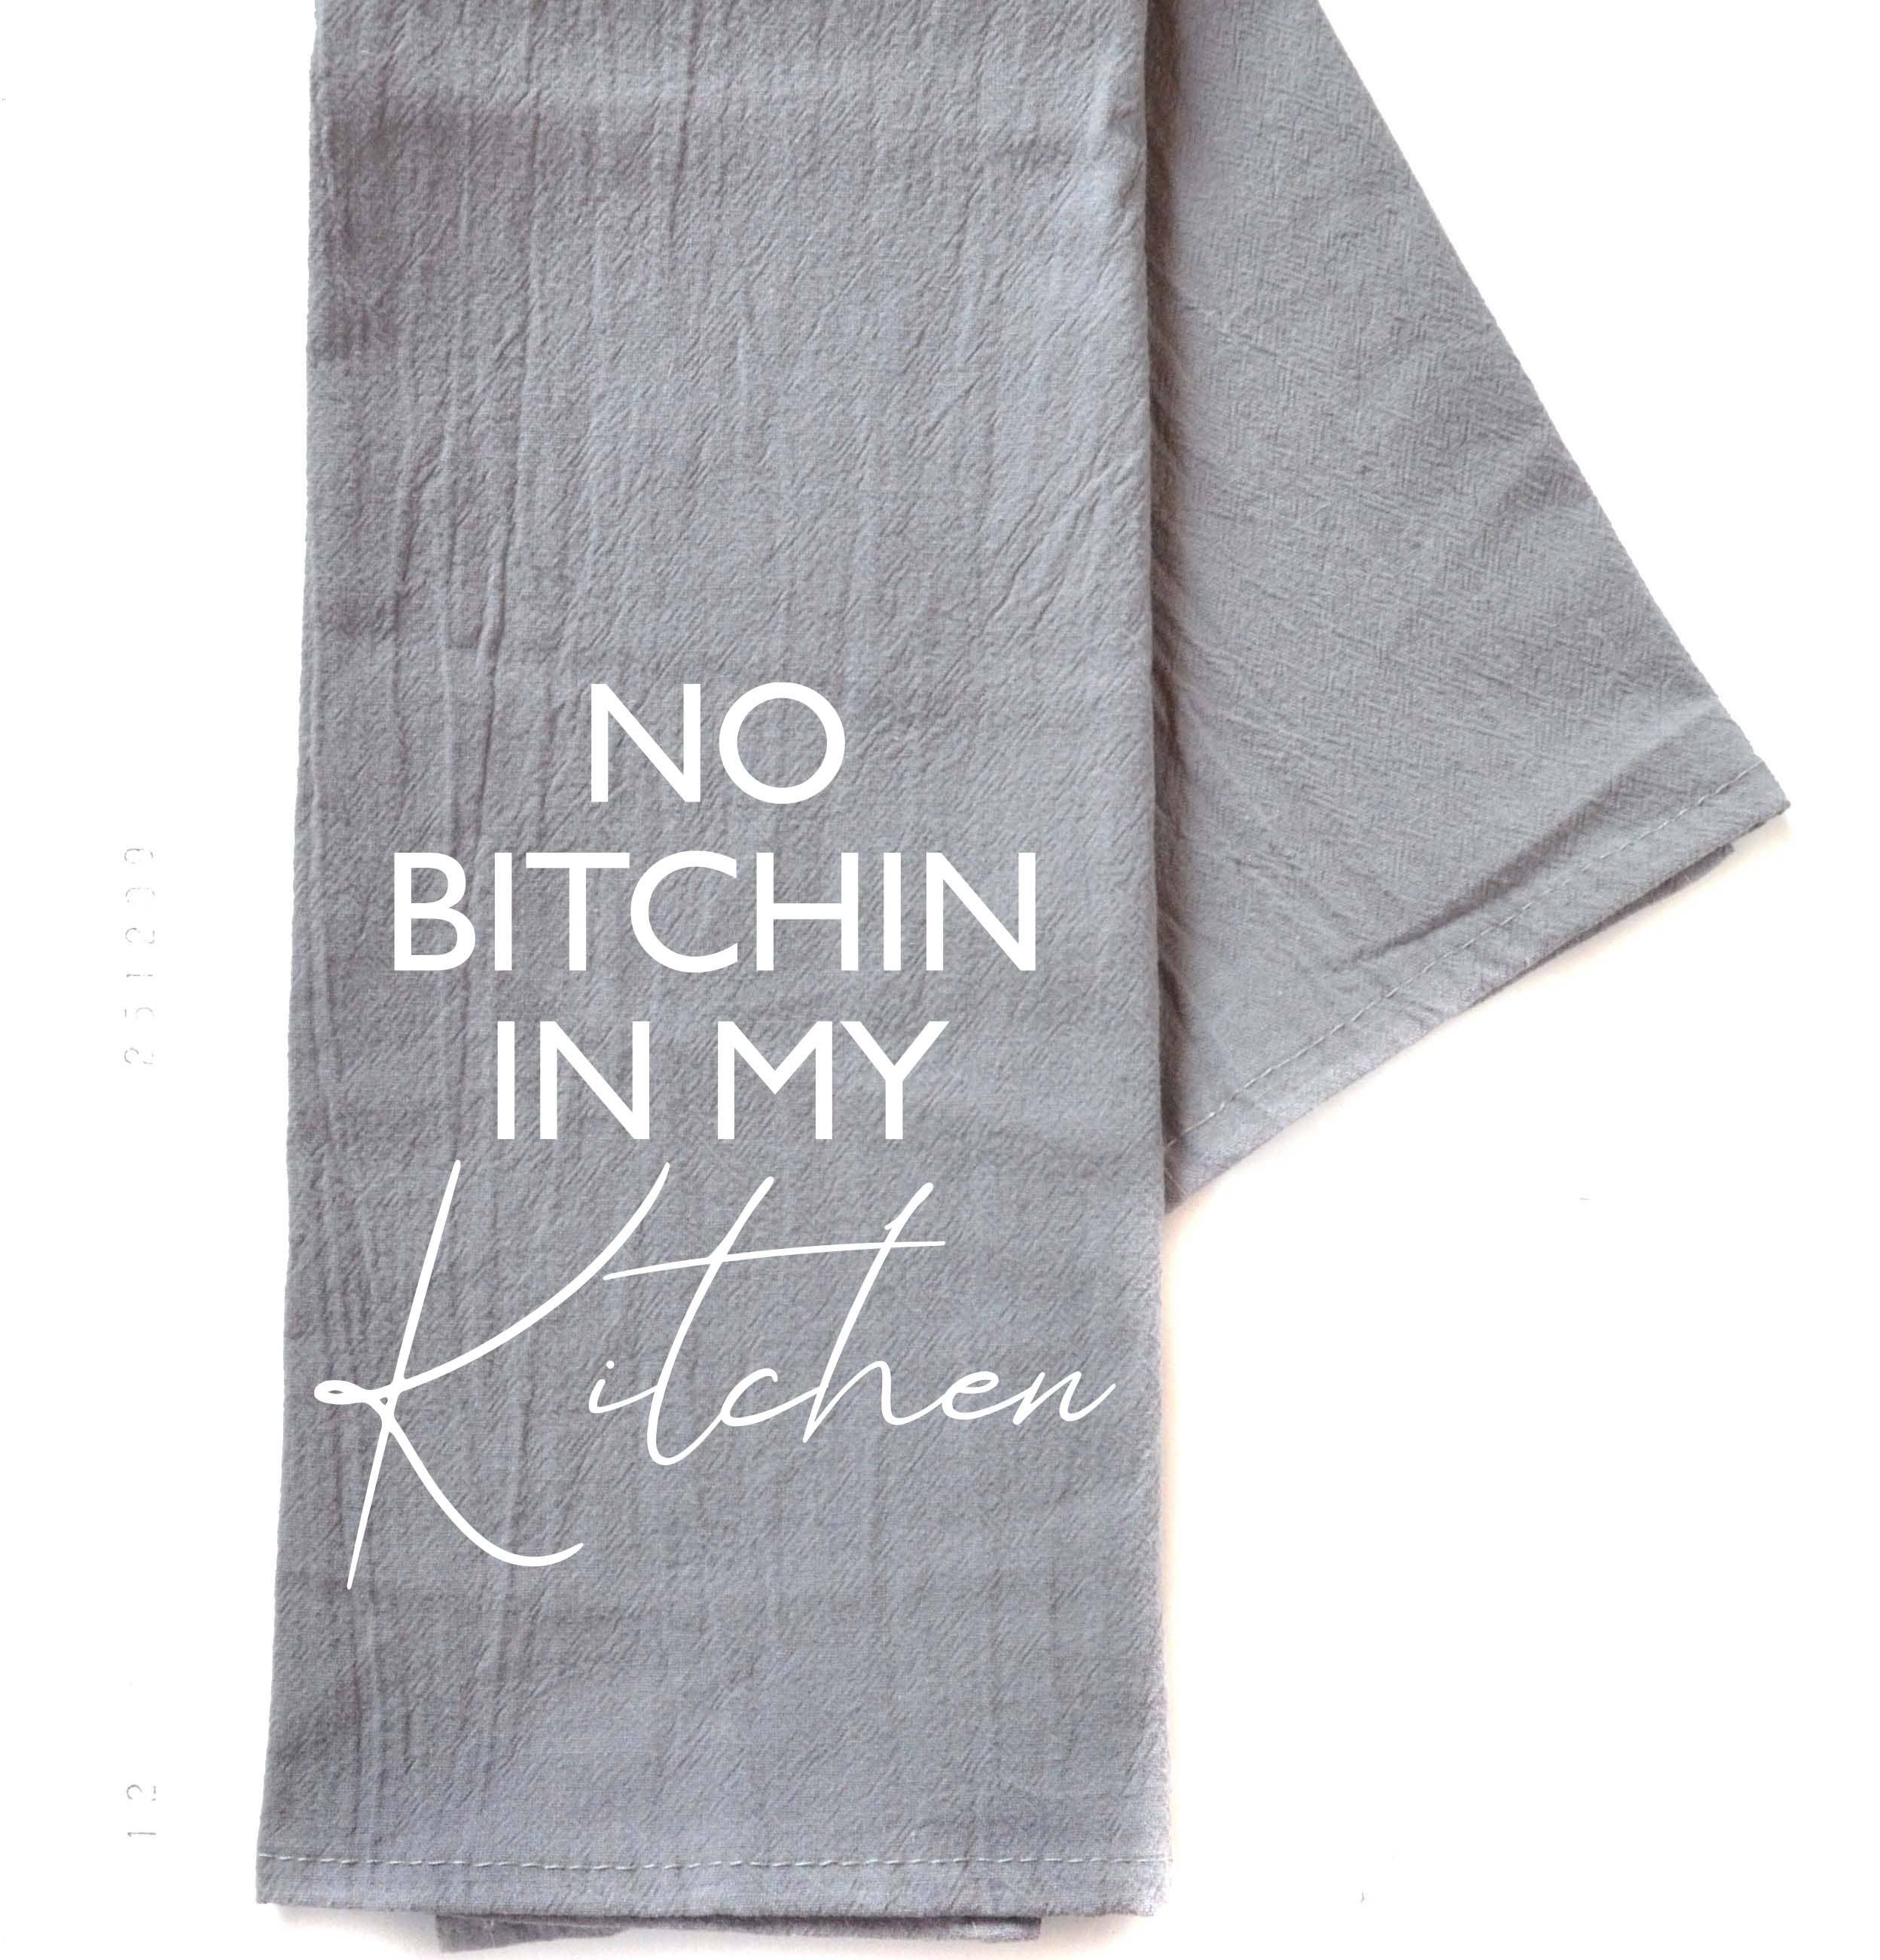 Cotton Kitchen Towels - Stonewall Kitchen - Stonewall Kitchen